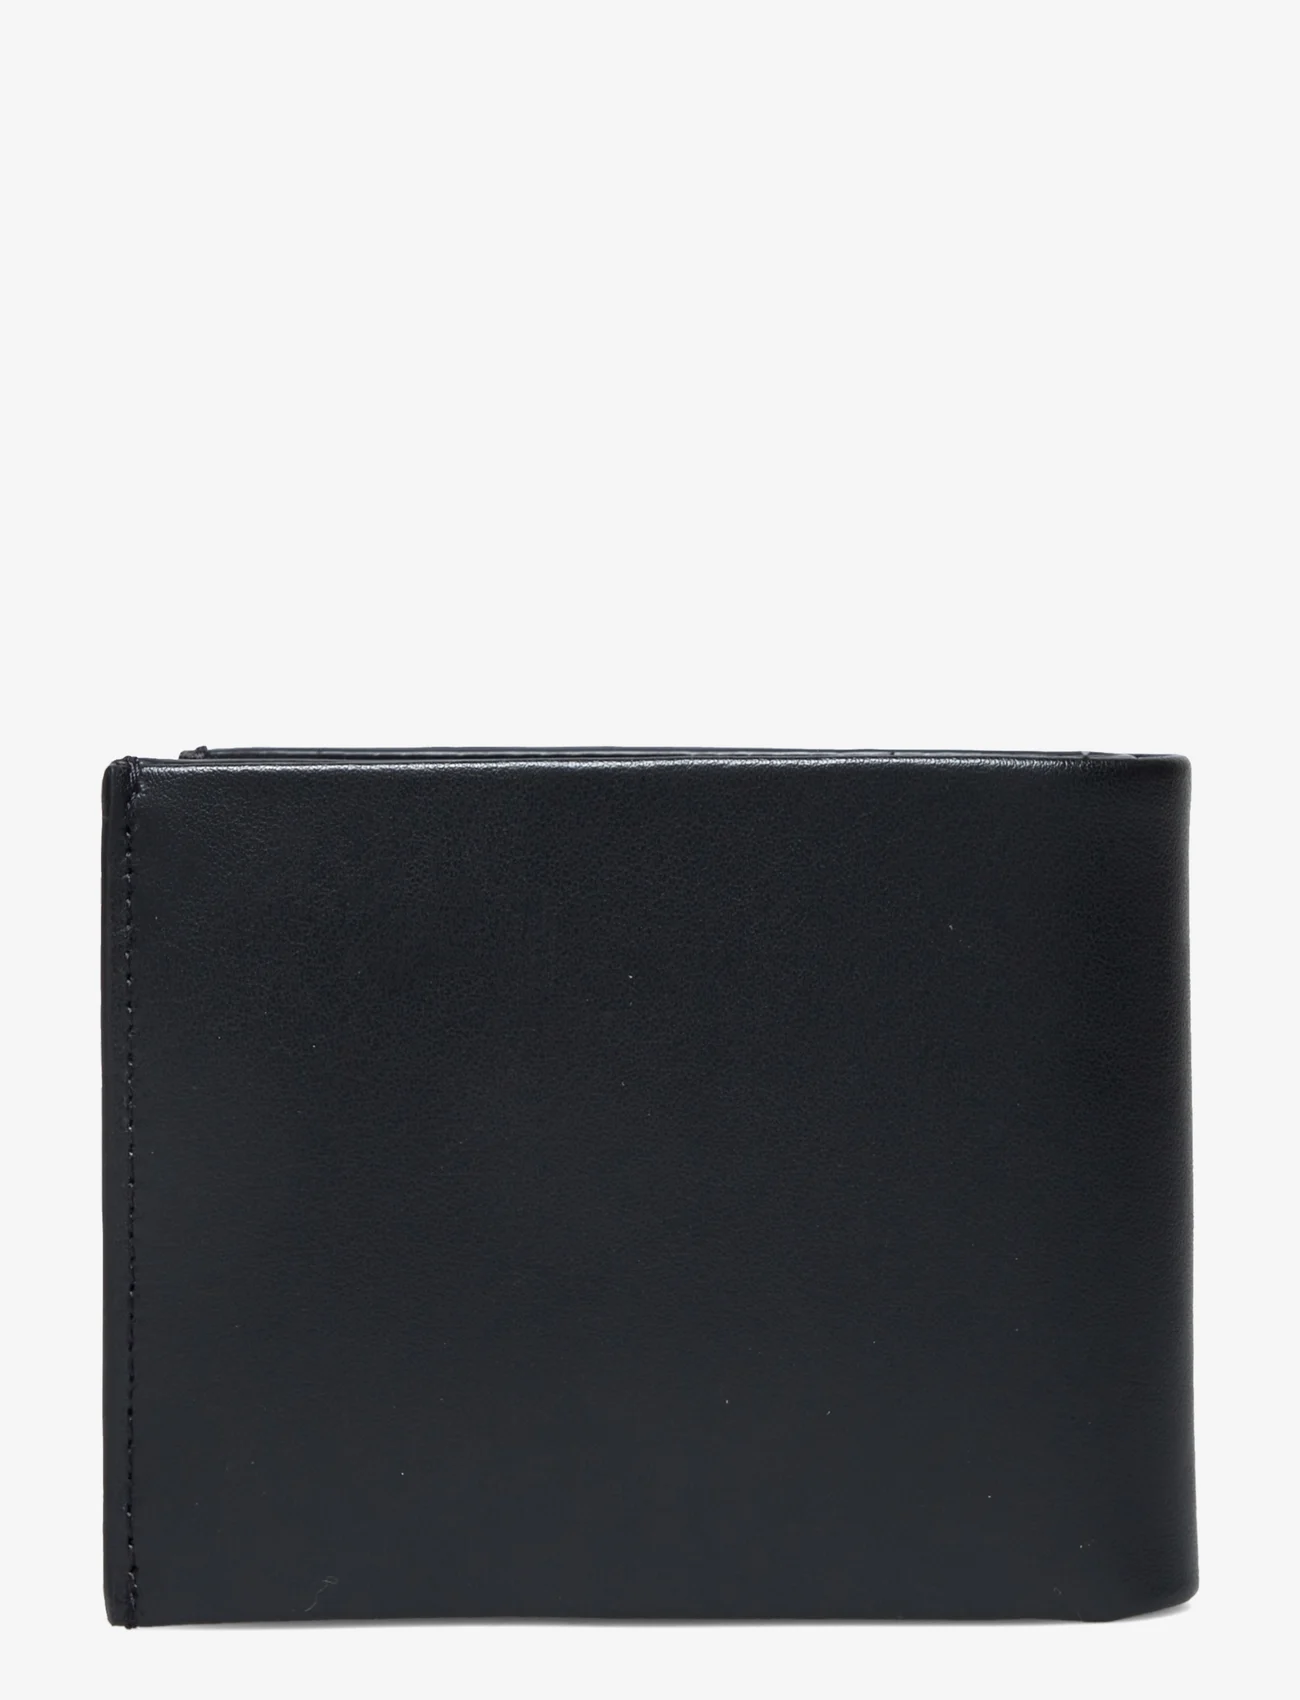 Calvin Klein - MINIMAL FOCUS BIFOLD 5CC W/COIN - wallets - ck black - 1